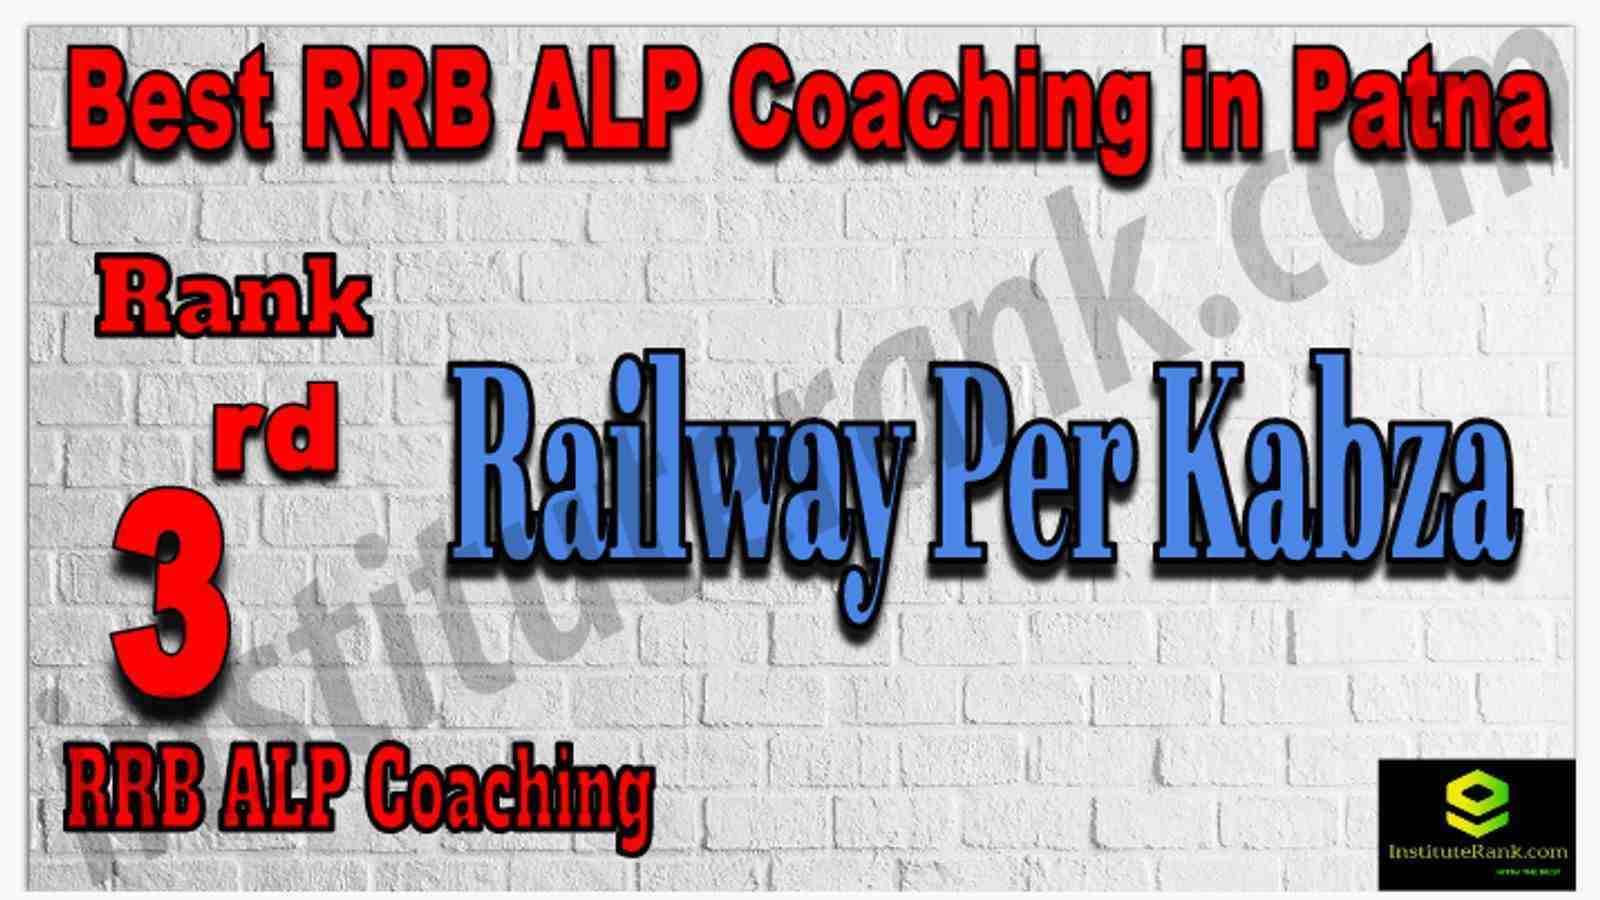 Rank 3rd RRB ALP Coaching in Patna